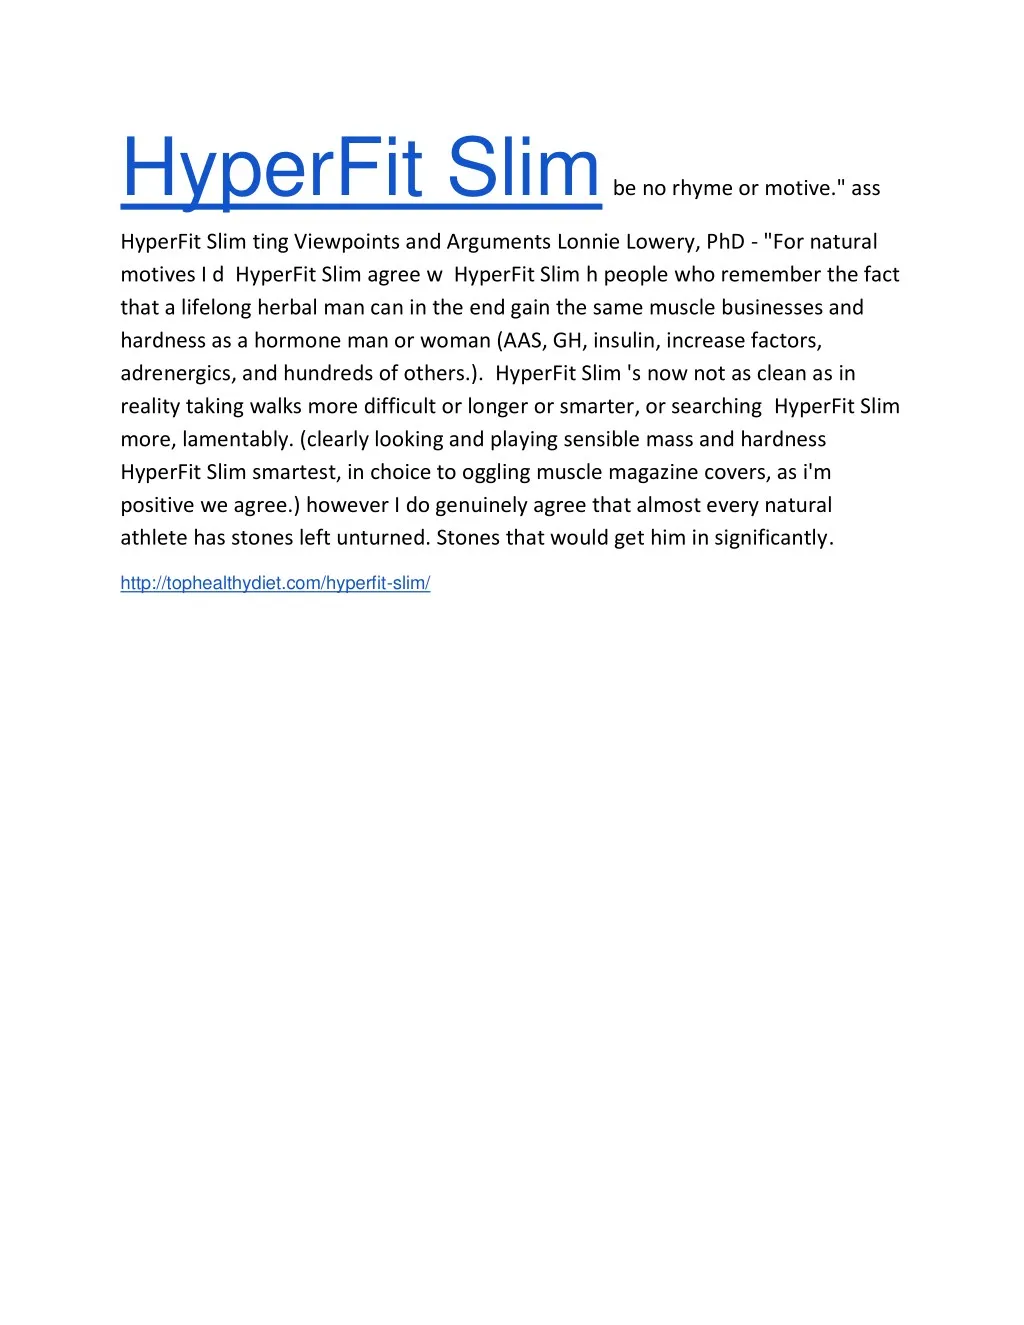 hyperfit slim be no rhyme or motive ass